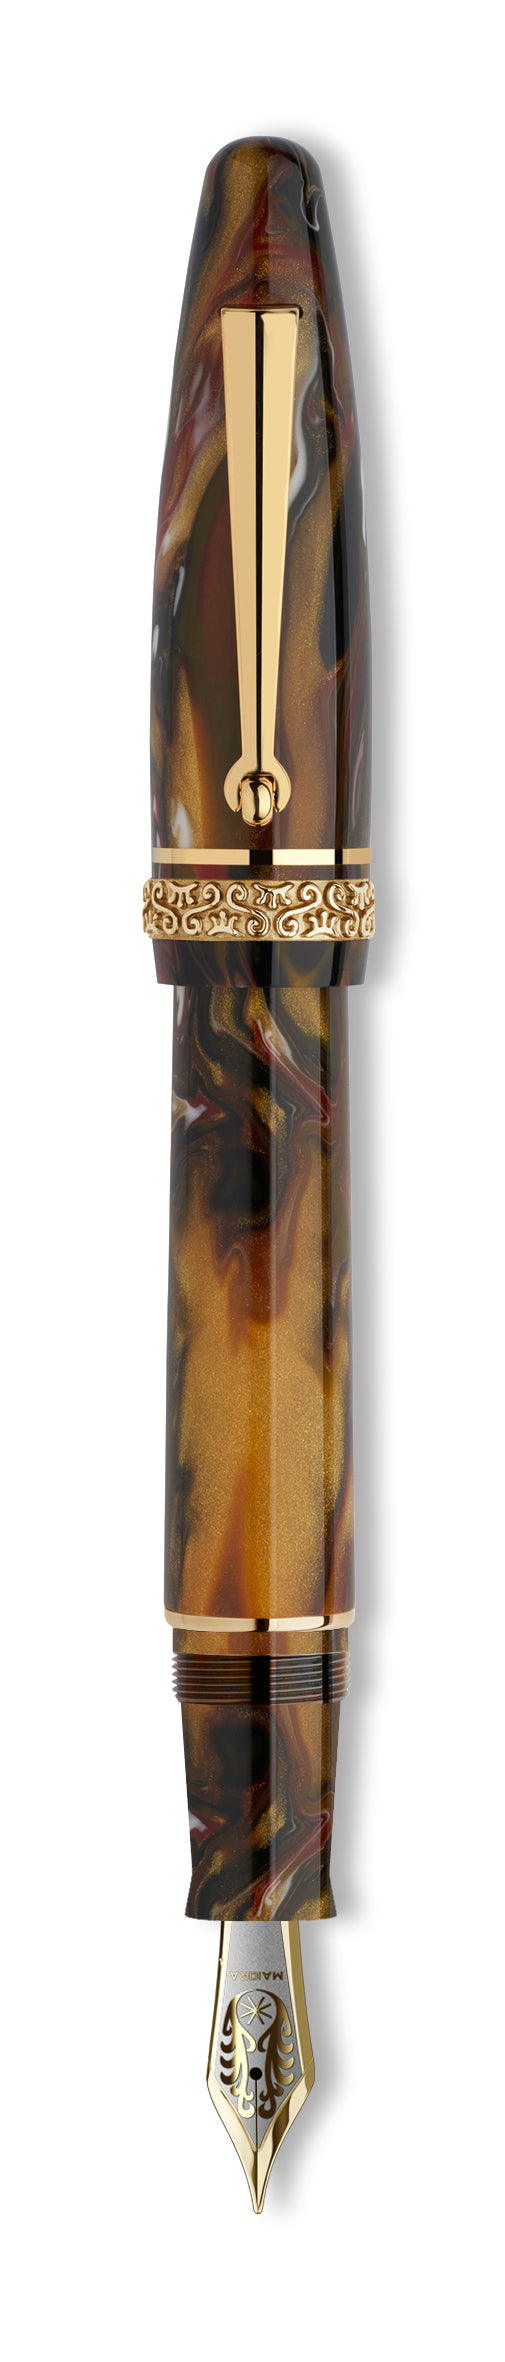 Maiora Ultra Ogiva Golden Age 2.0 Fire GT Fountain Pen